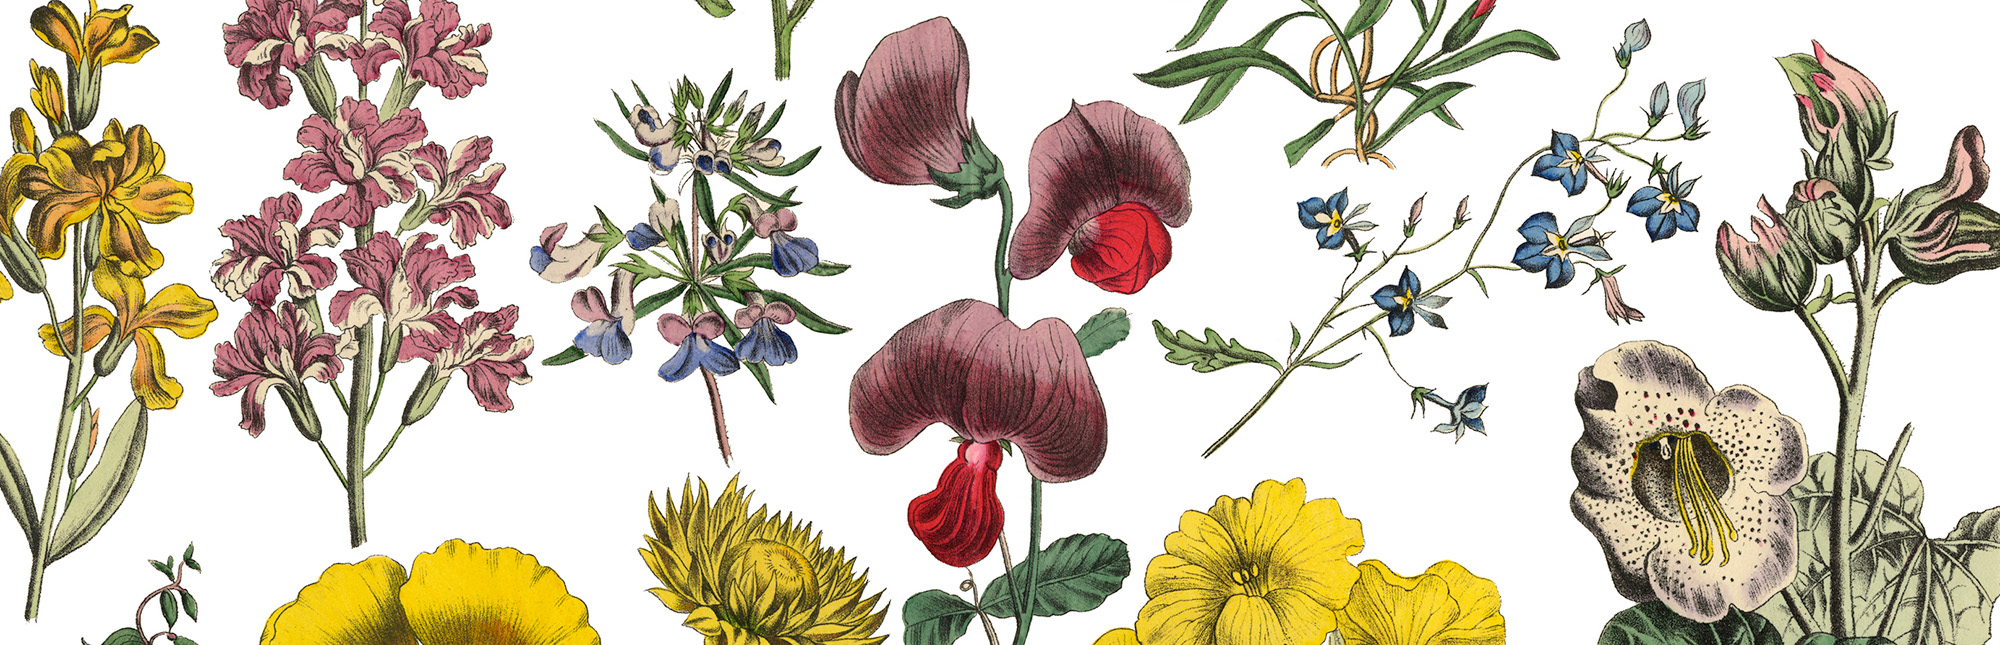 Flower illustrations